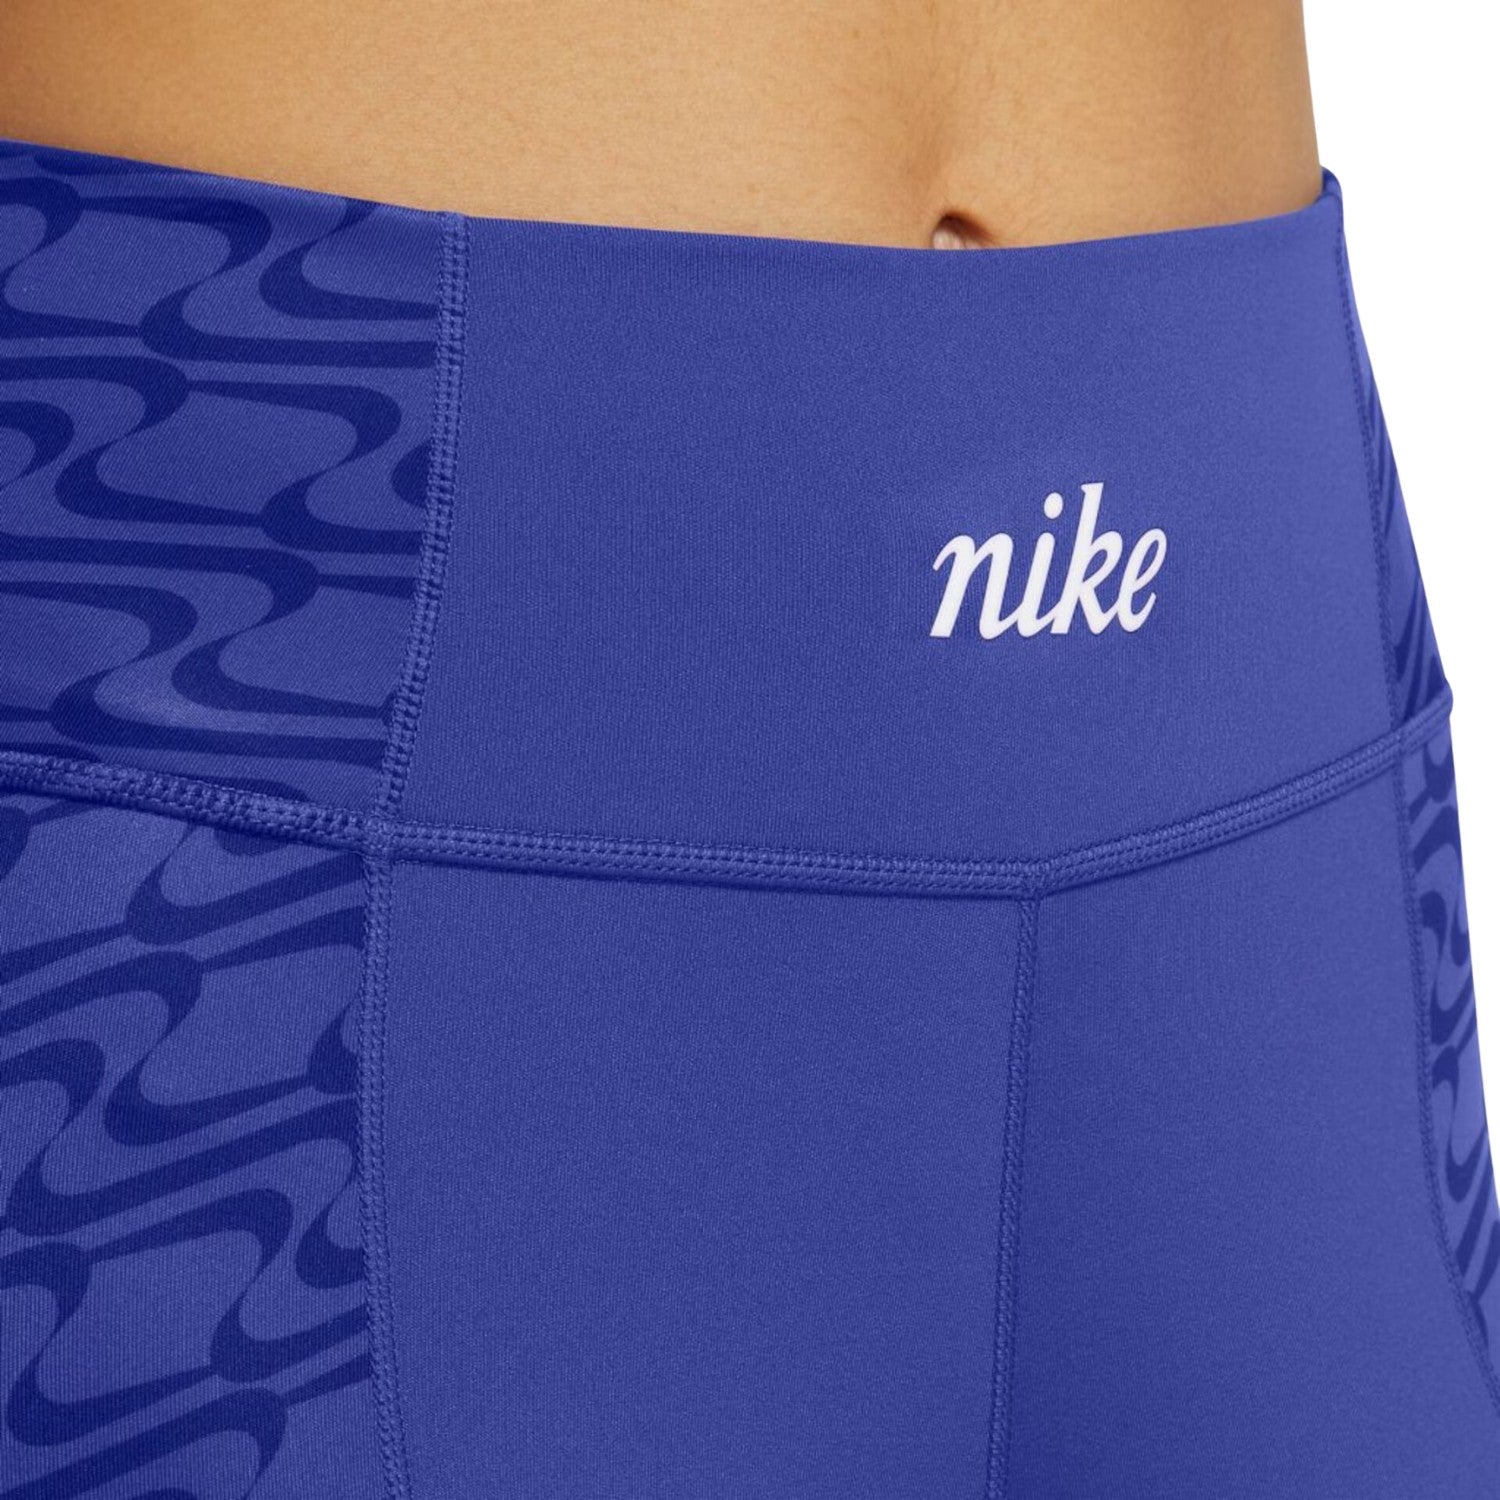 Nike Dri-fit One Icon Clash Legging Feminina Womens Style : Dq6401